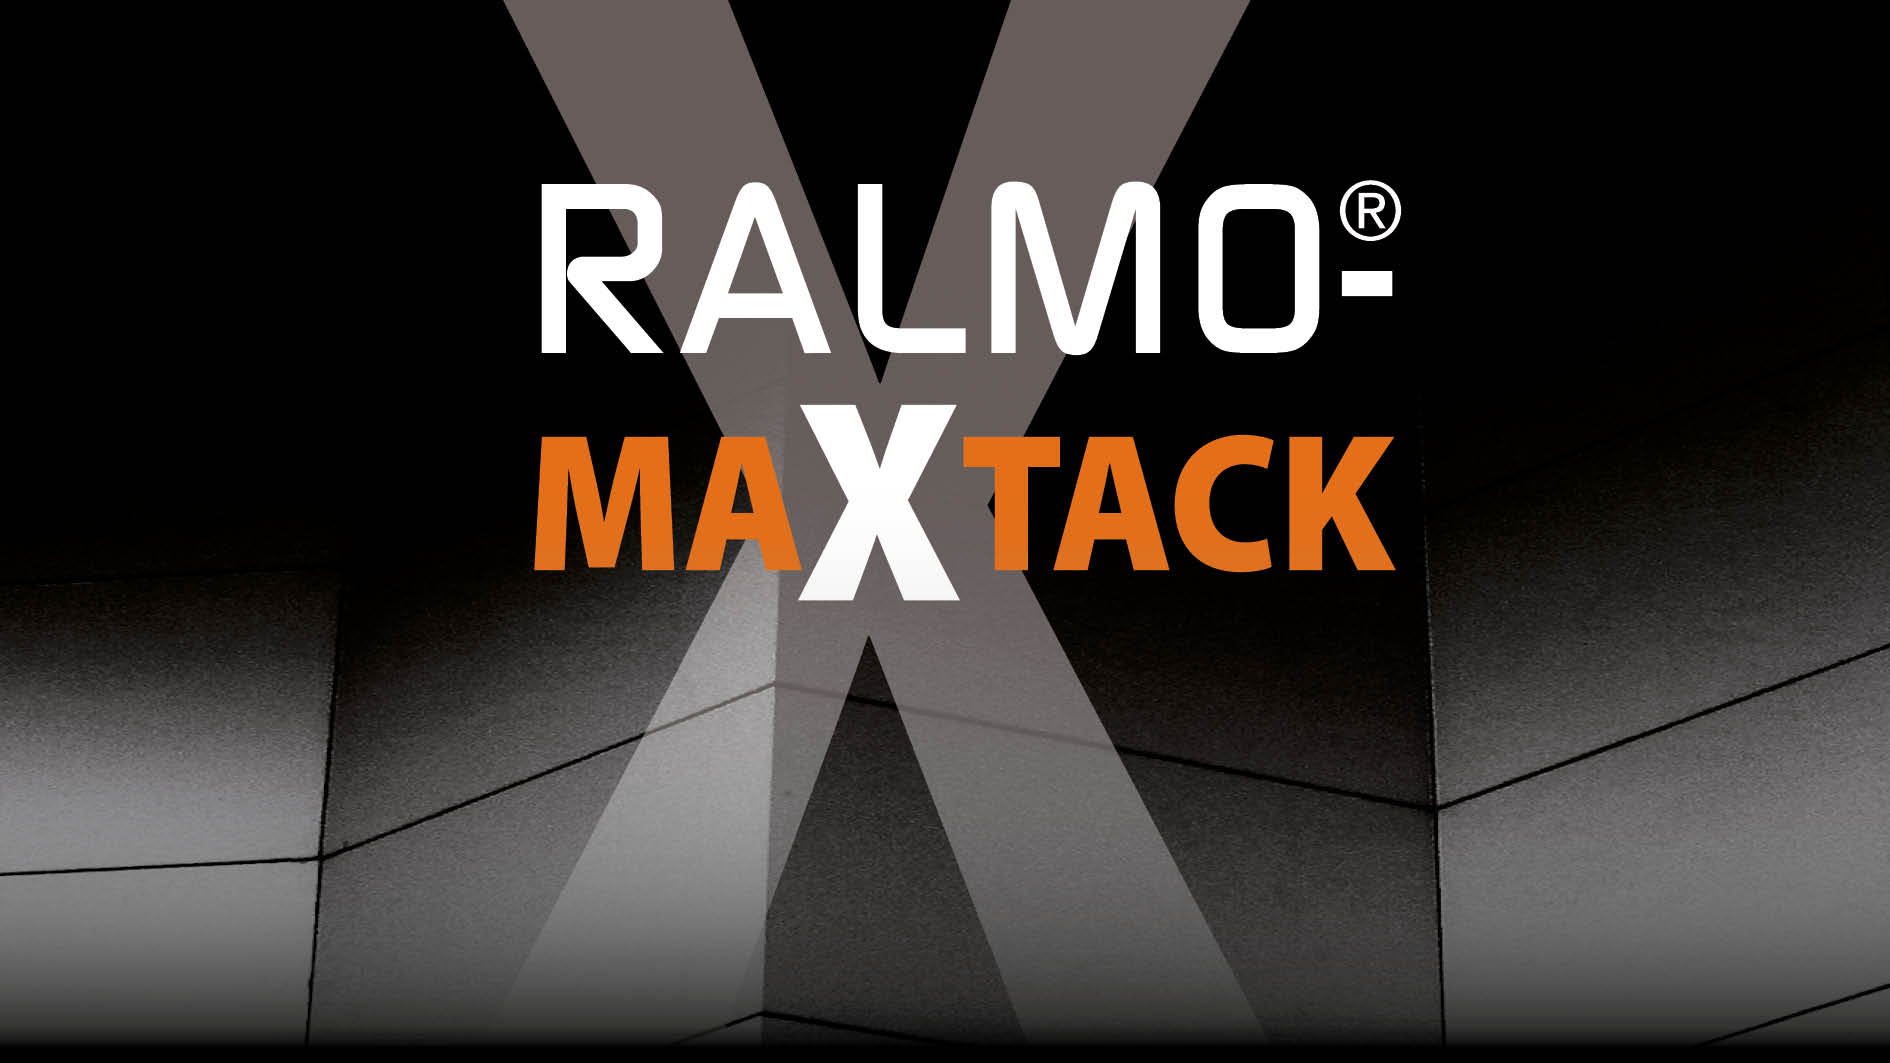 Ralmo MaXTack